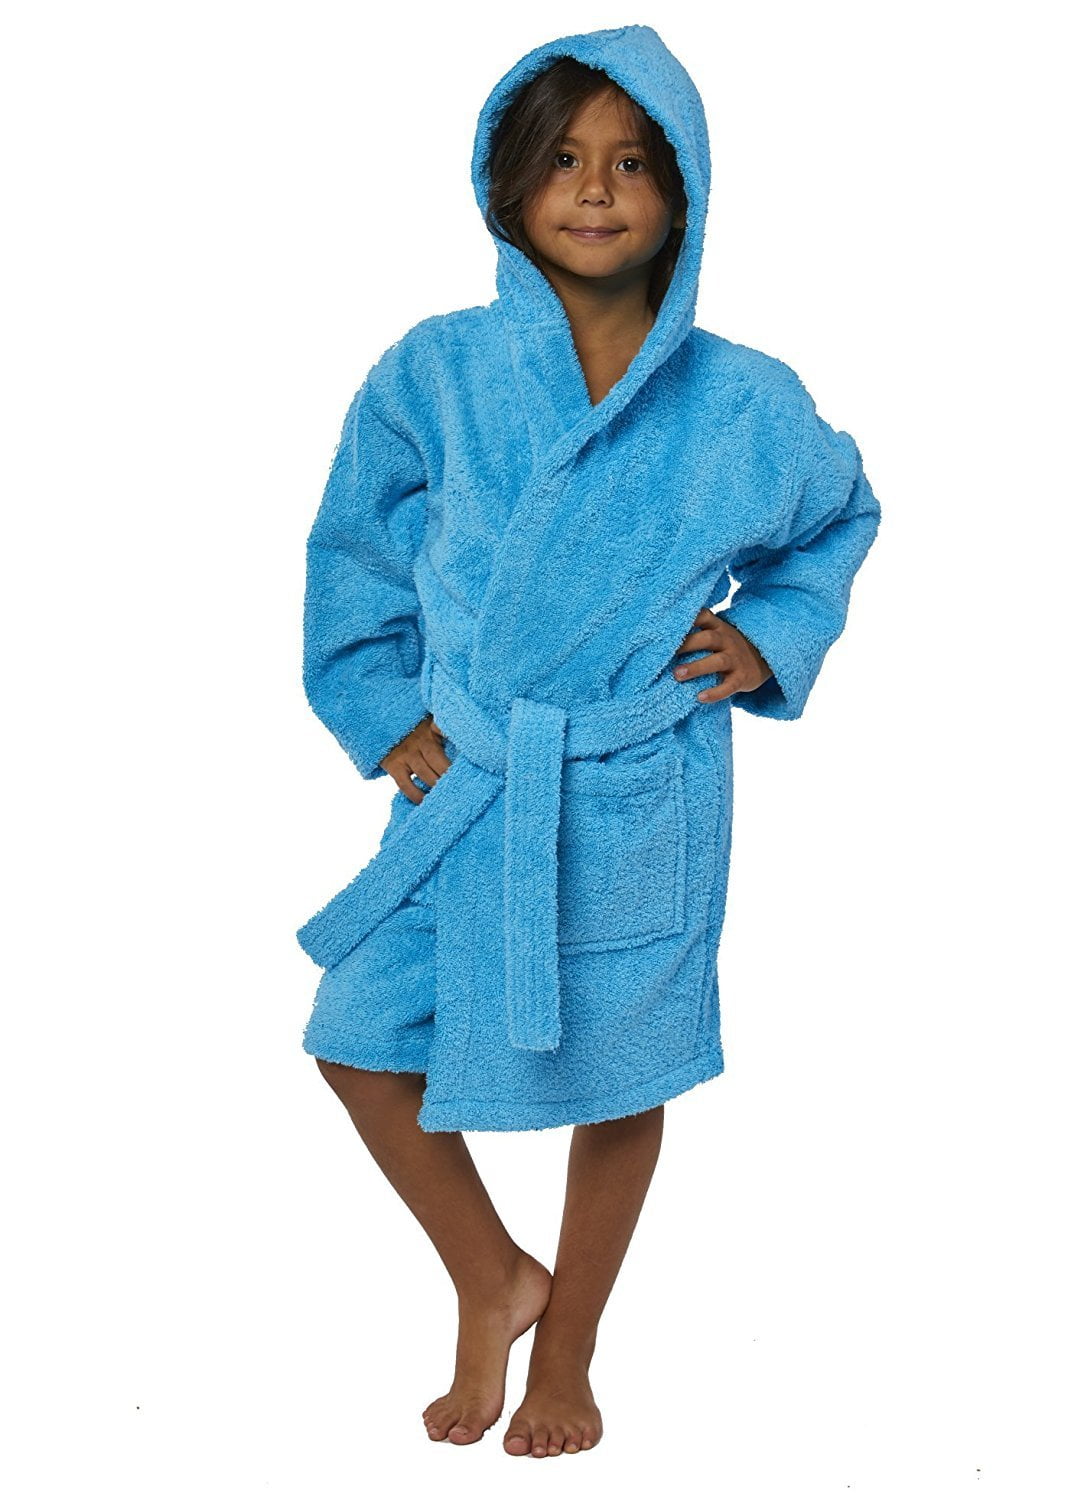 CHILDREN'S BATHROBE TOWELS FOR GIRLS PRINCESS DESIGNS 100% Cotton! 